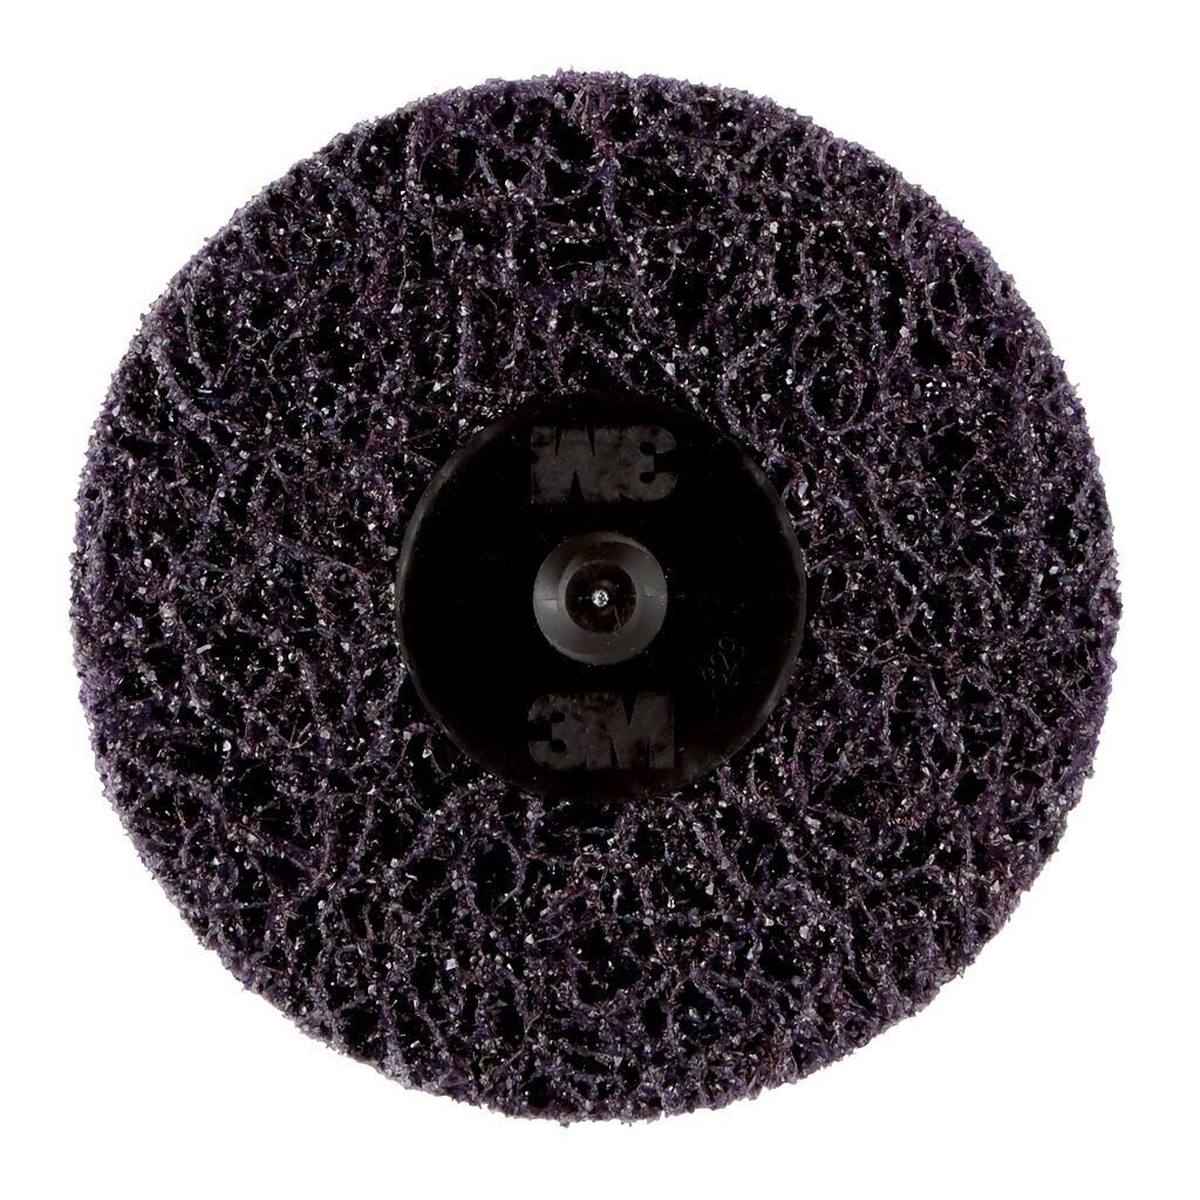 3M Scotch-Brite Roloc Coarse cleaning disc XT-DR Pro, 75 mm, S, extra coarse